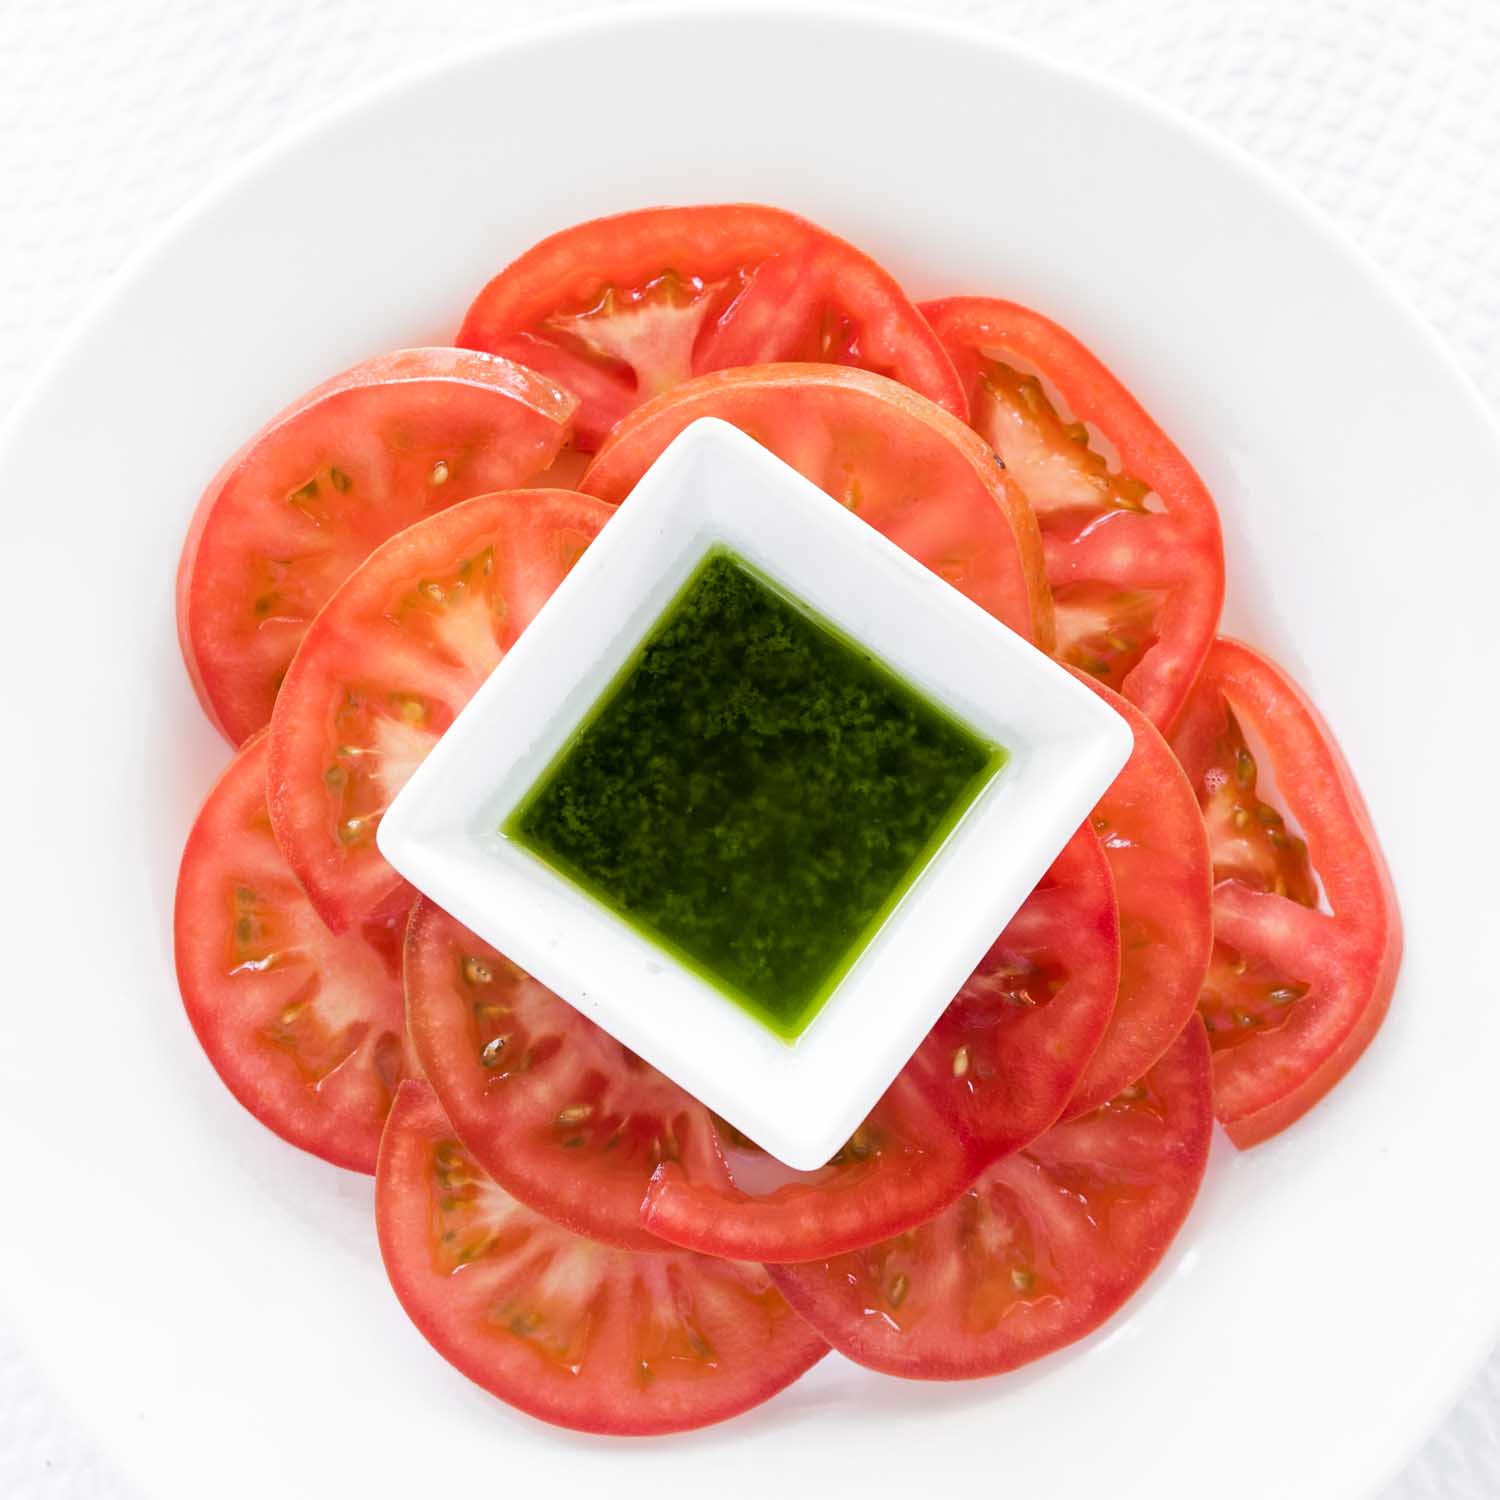 Tomato with garlic